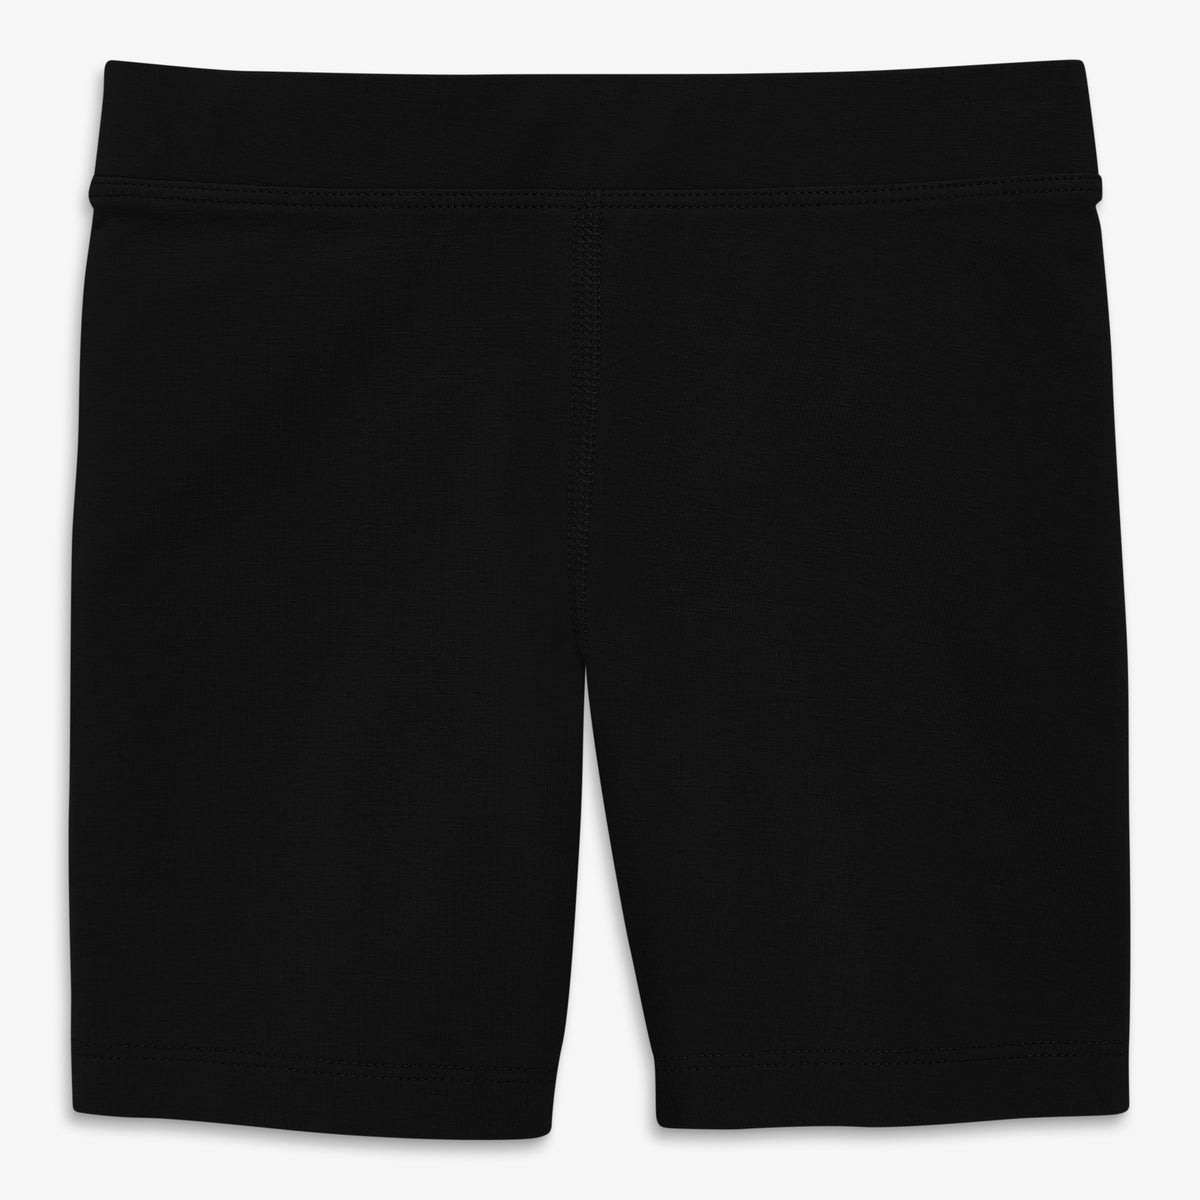 Black Shorts, Girls